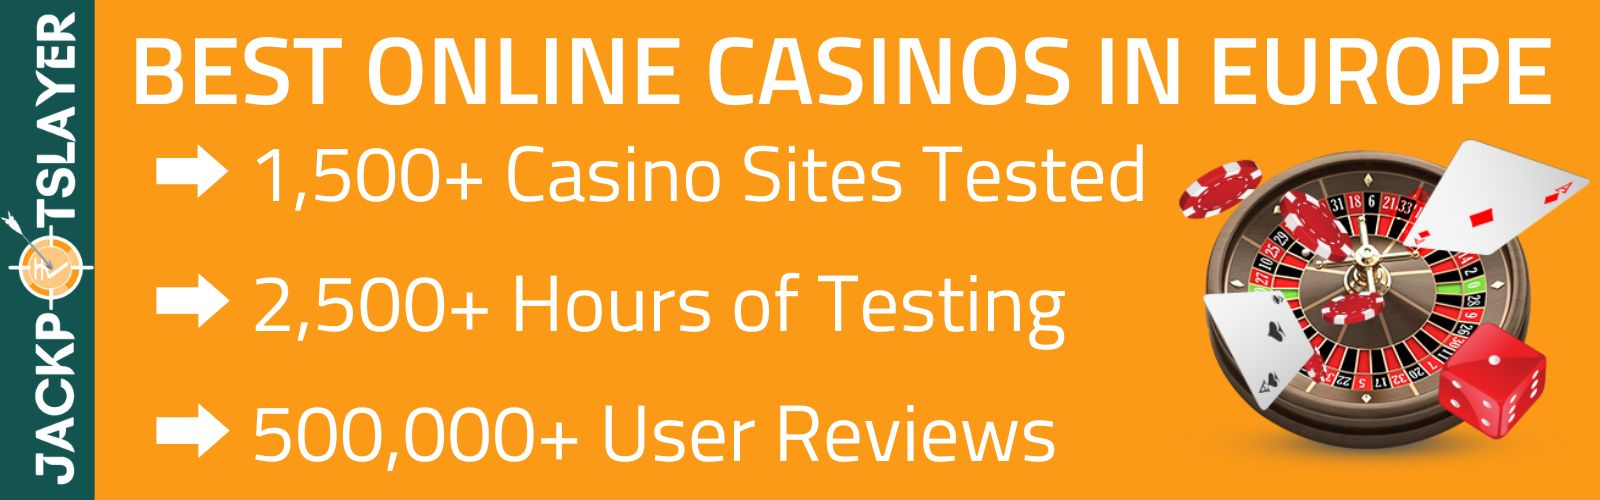 Best Online Casinos in Europe